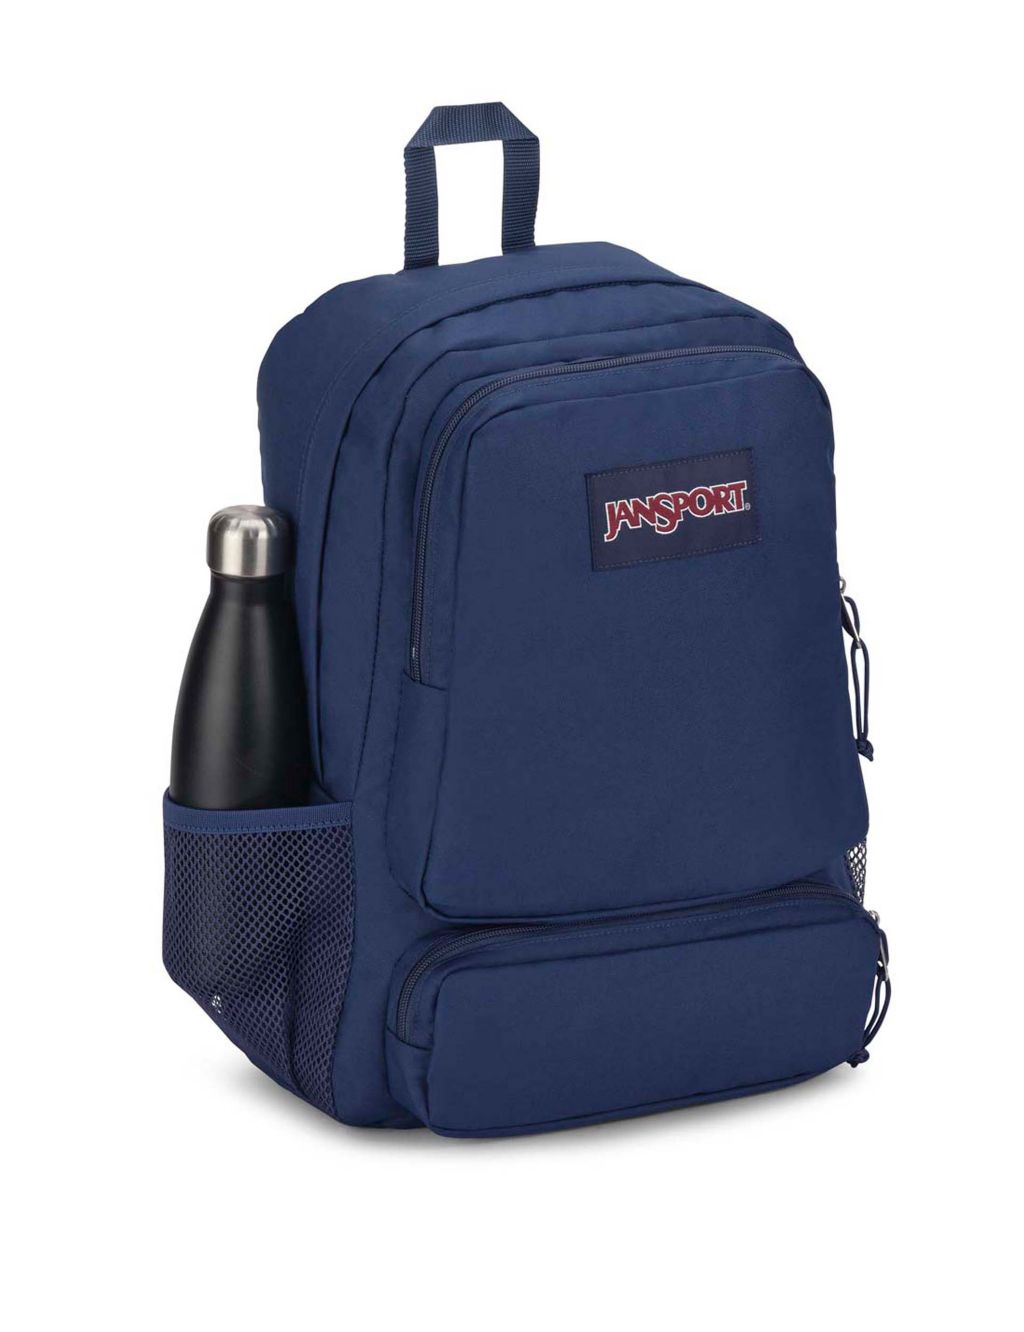 Doubleton Multi Pocket Backpack image 6